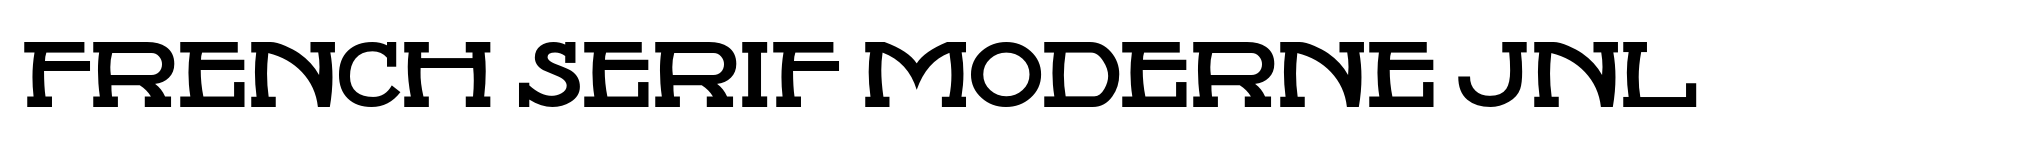 French Serif Moderne JNL image